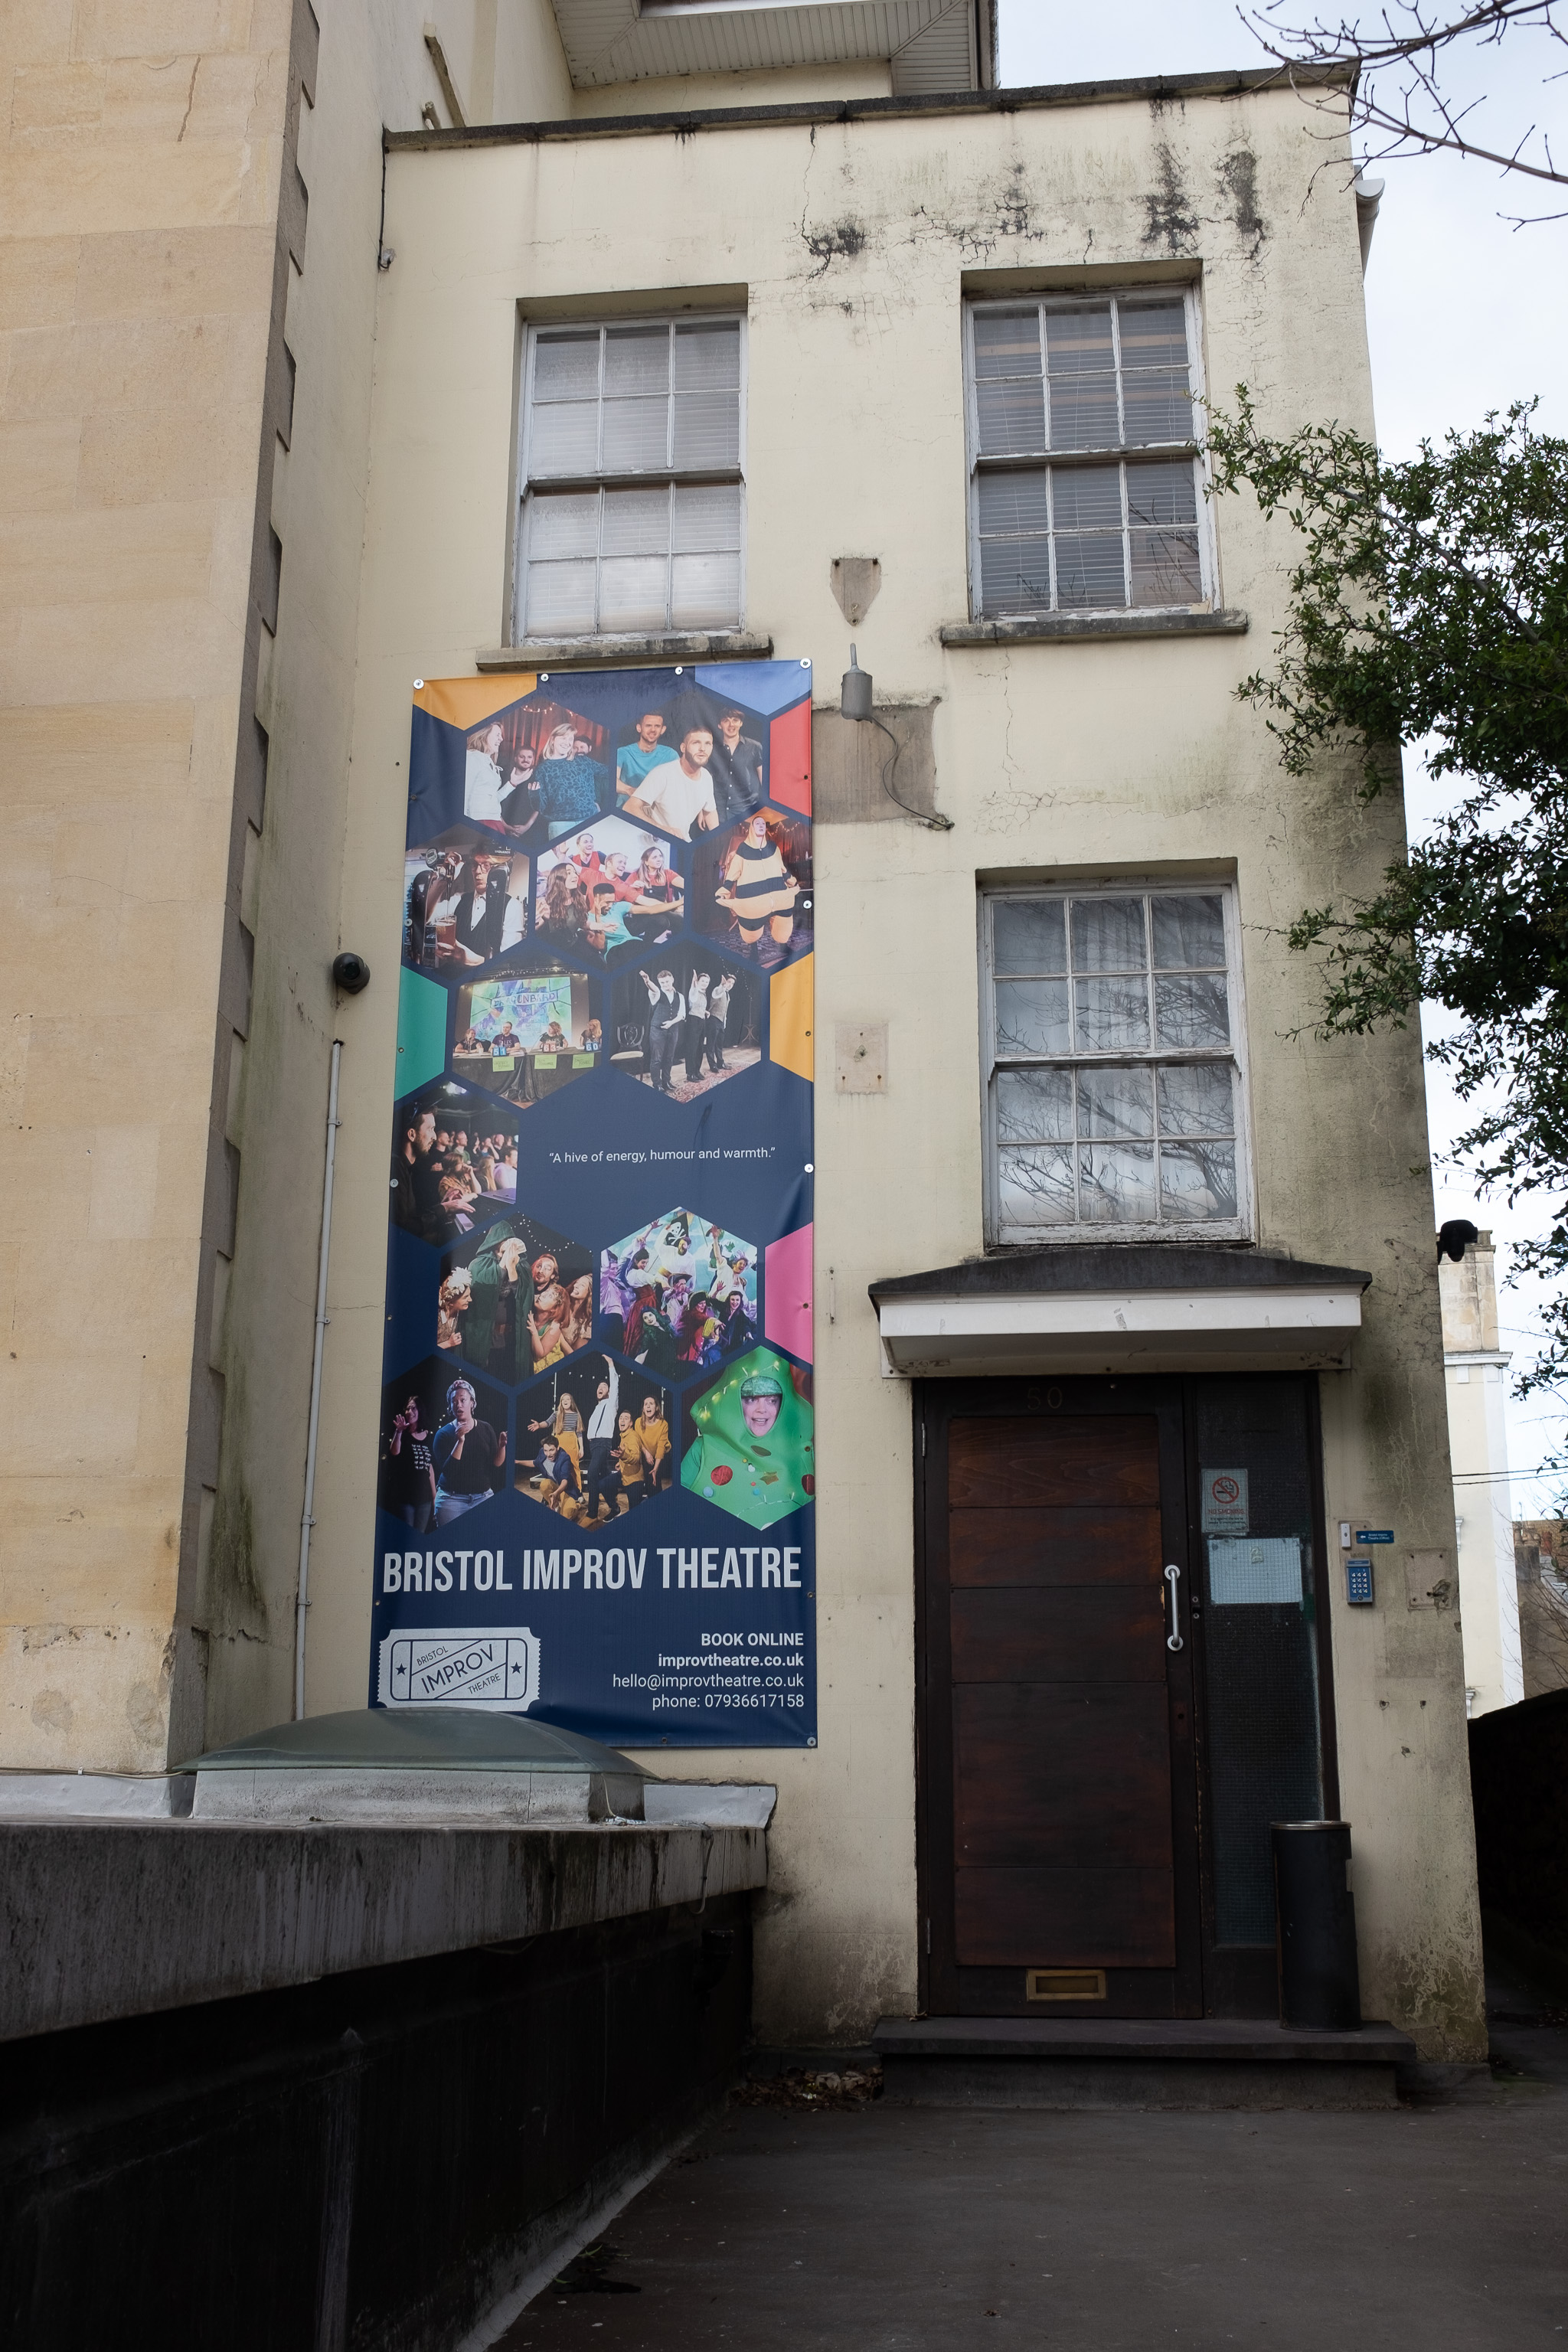 Bristol Improv Theatre
